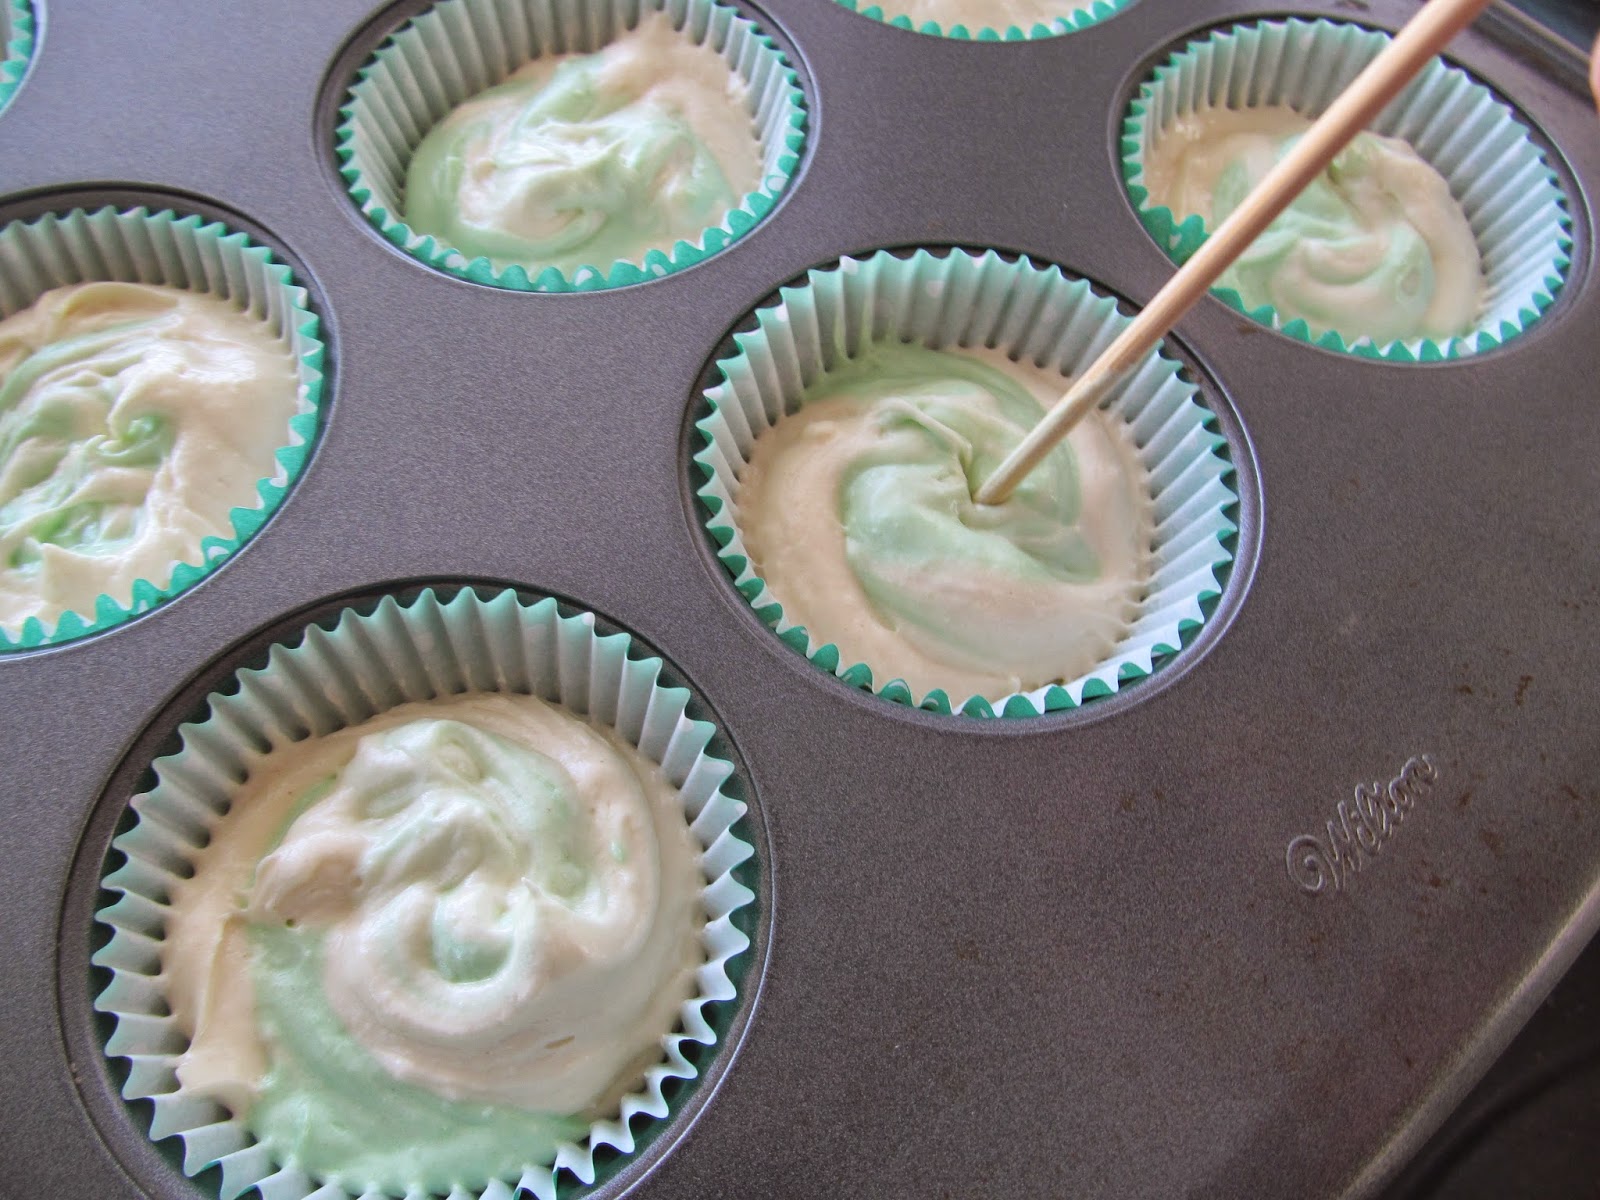 cupcake batter with green swirls